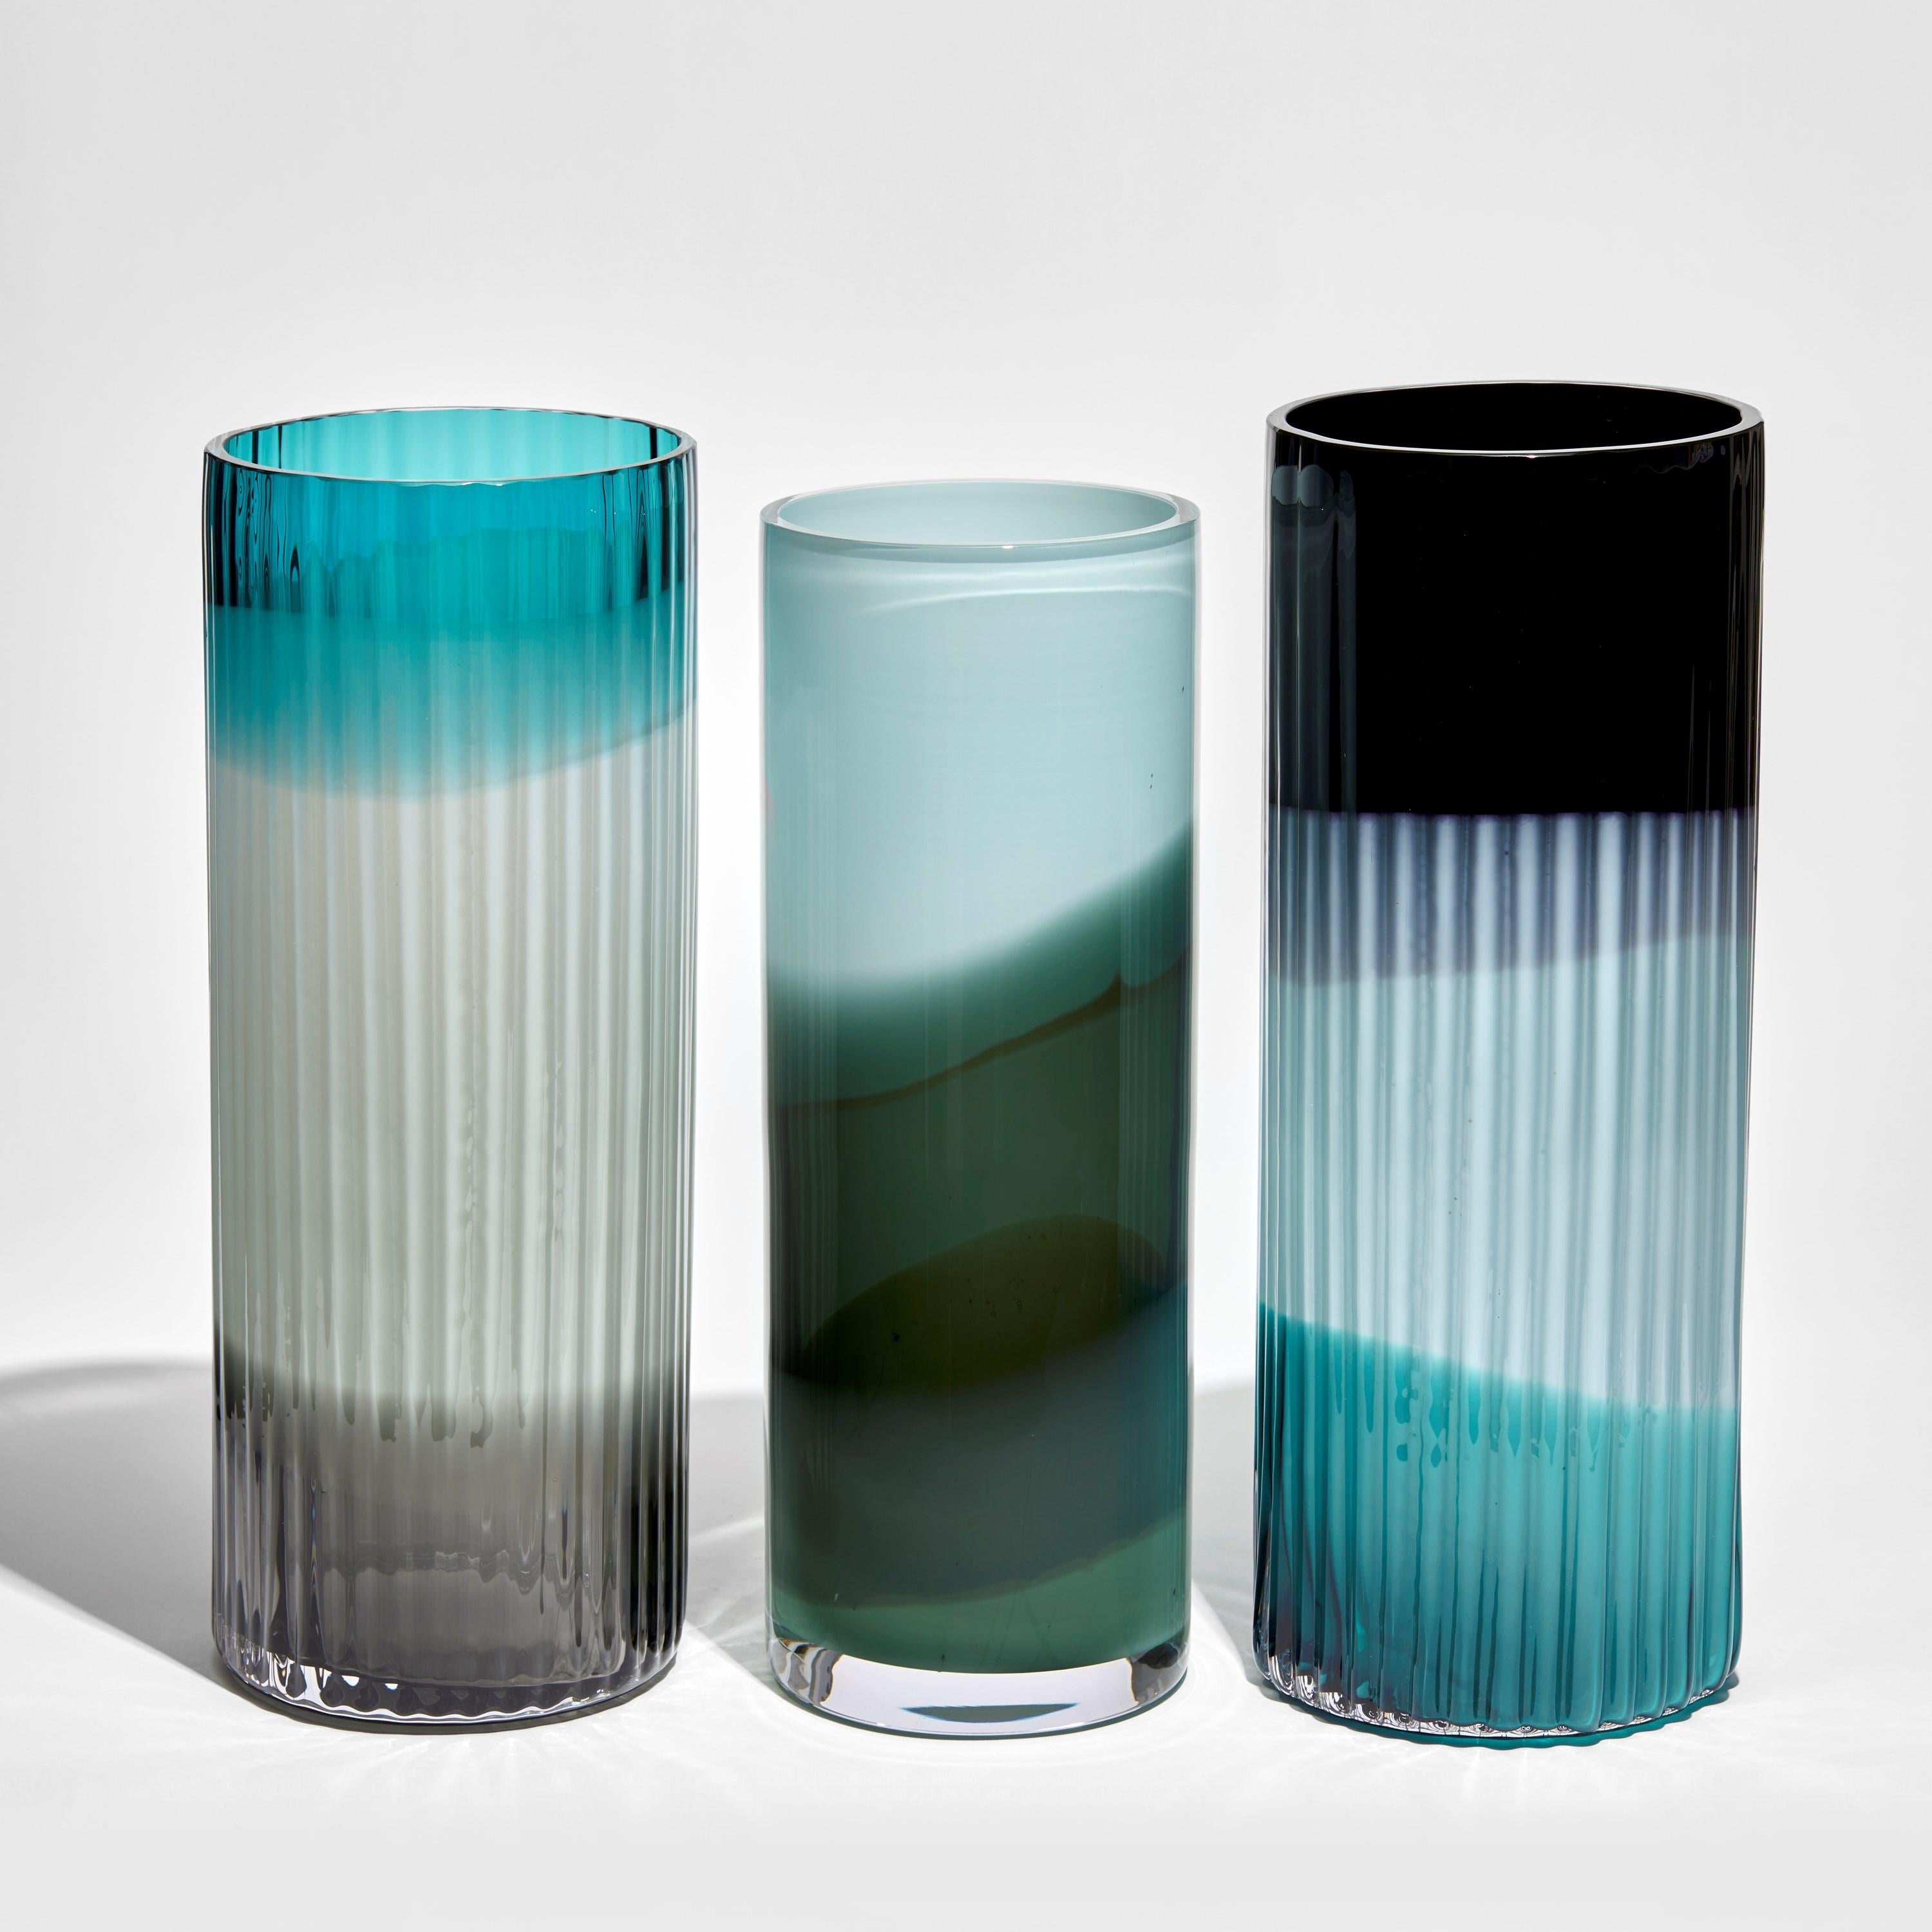 Organic Modern  Plissé vase in Black, Turquoise & Light Blue, a glass vase by Lena Bergström For Sale